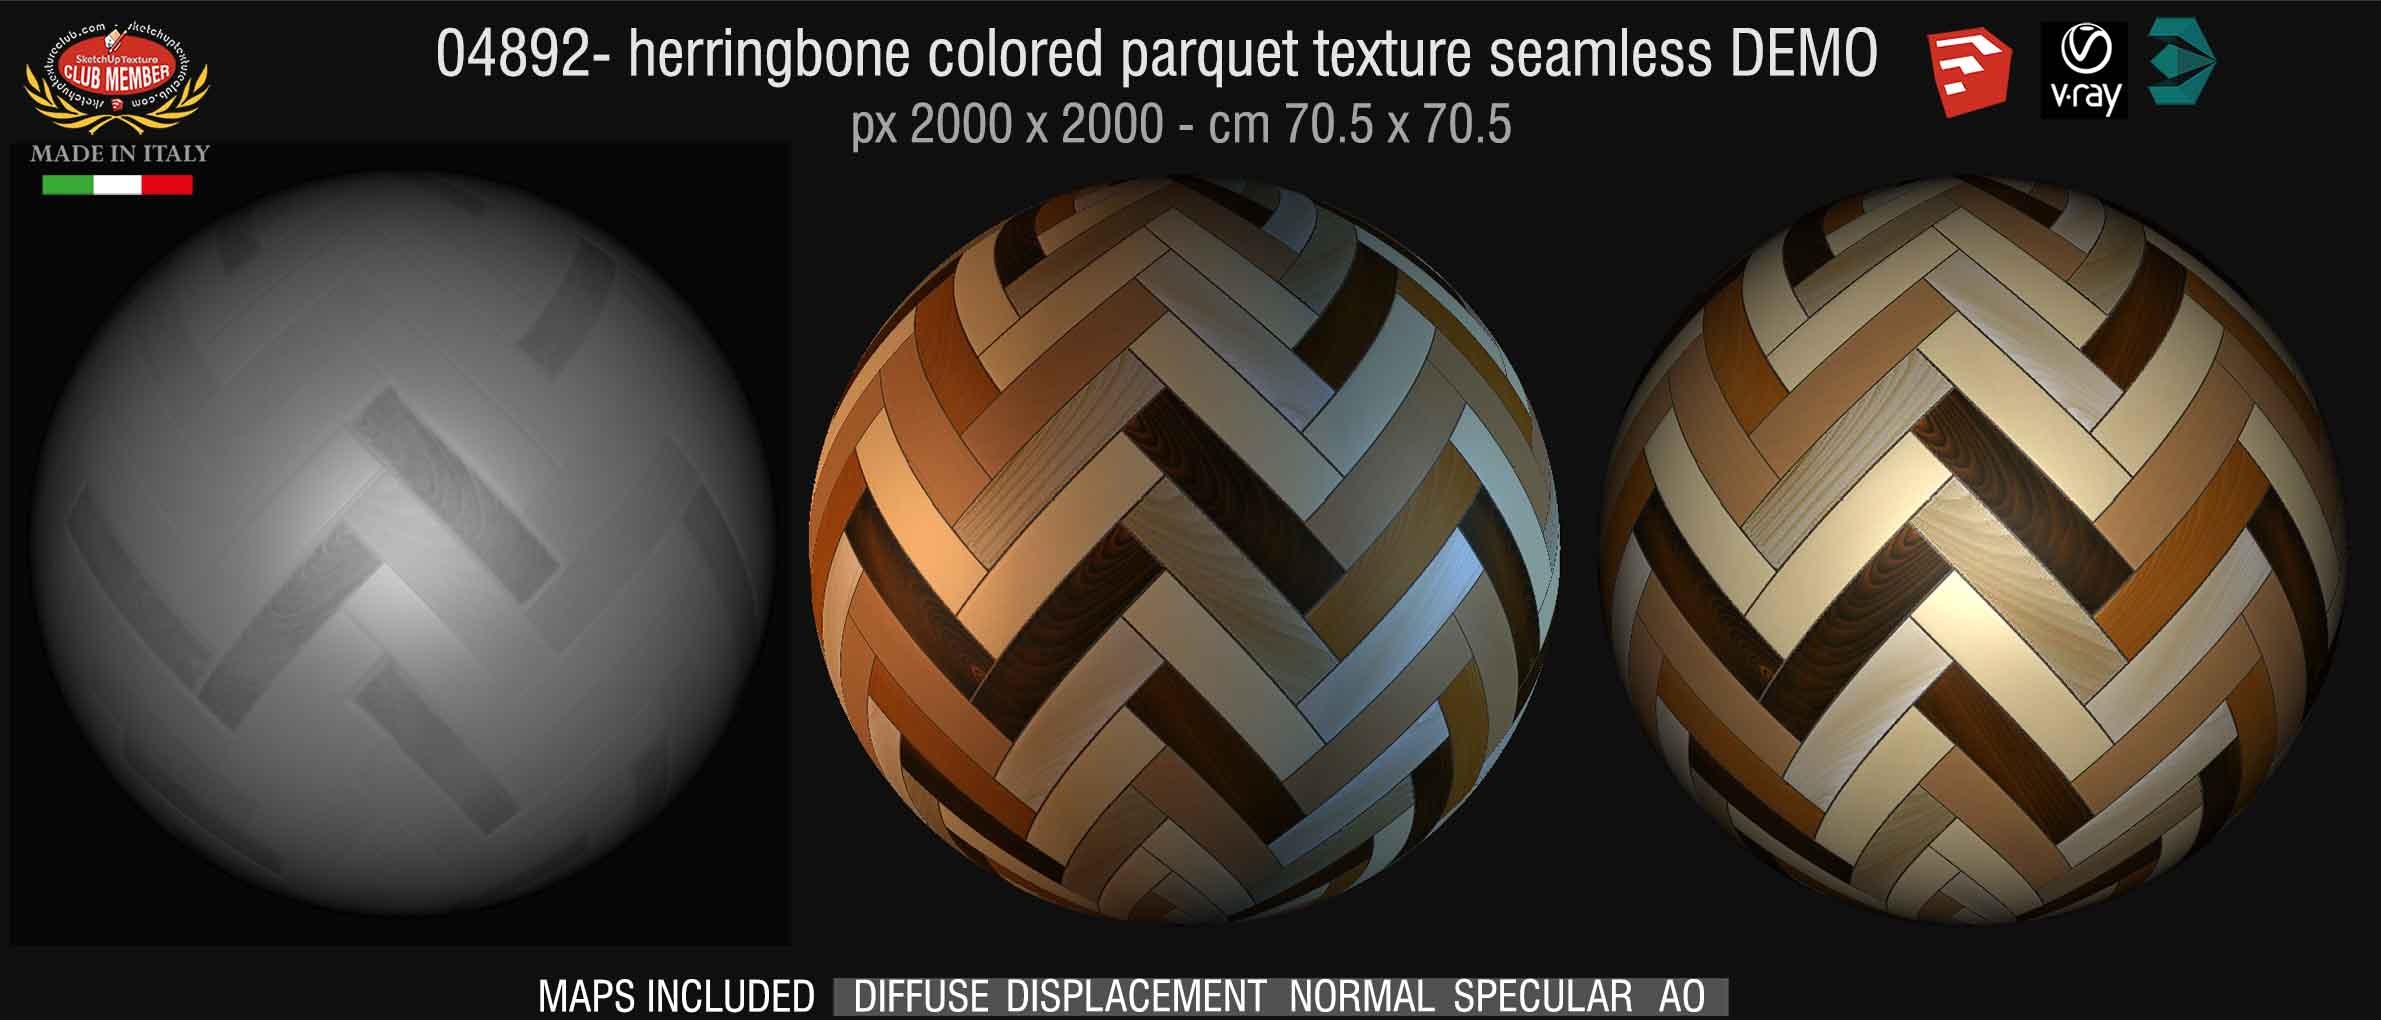 04892 HR  Herringbone colored parquet texture seamless + maps DEMO